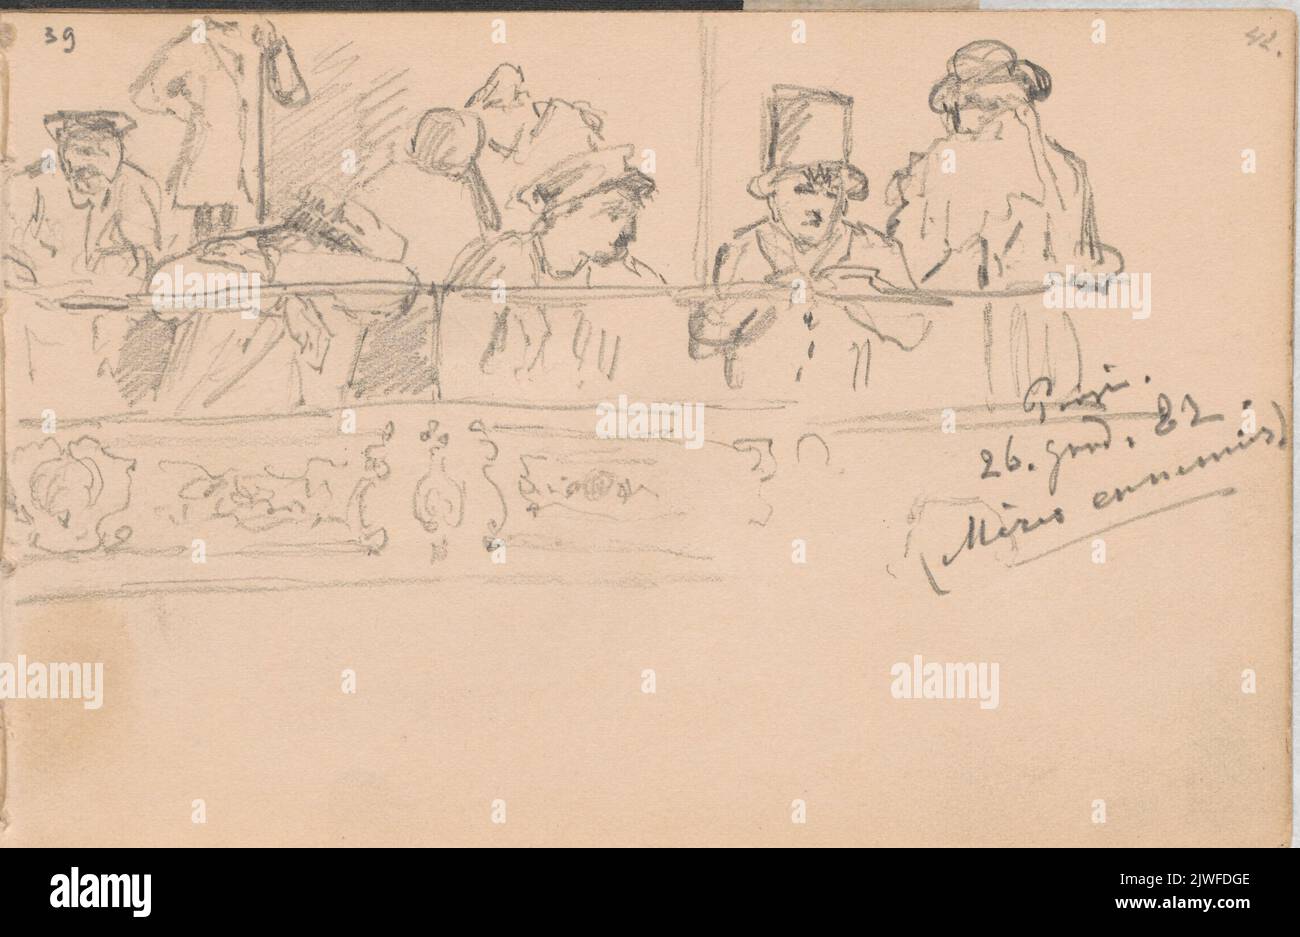 Scena w teatrze – publiczność na przedstawieniu sztuki Les meres ennemies Catulle’a Mendesa w Théâtre de l’Ambigu. Bilińska-Bohdanowiczowa, Anna (1854-1893), disegnatore, cartoonista Foto Stock